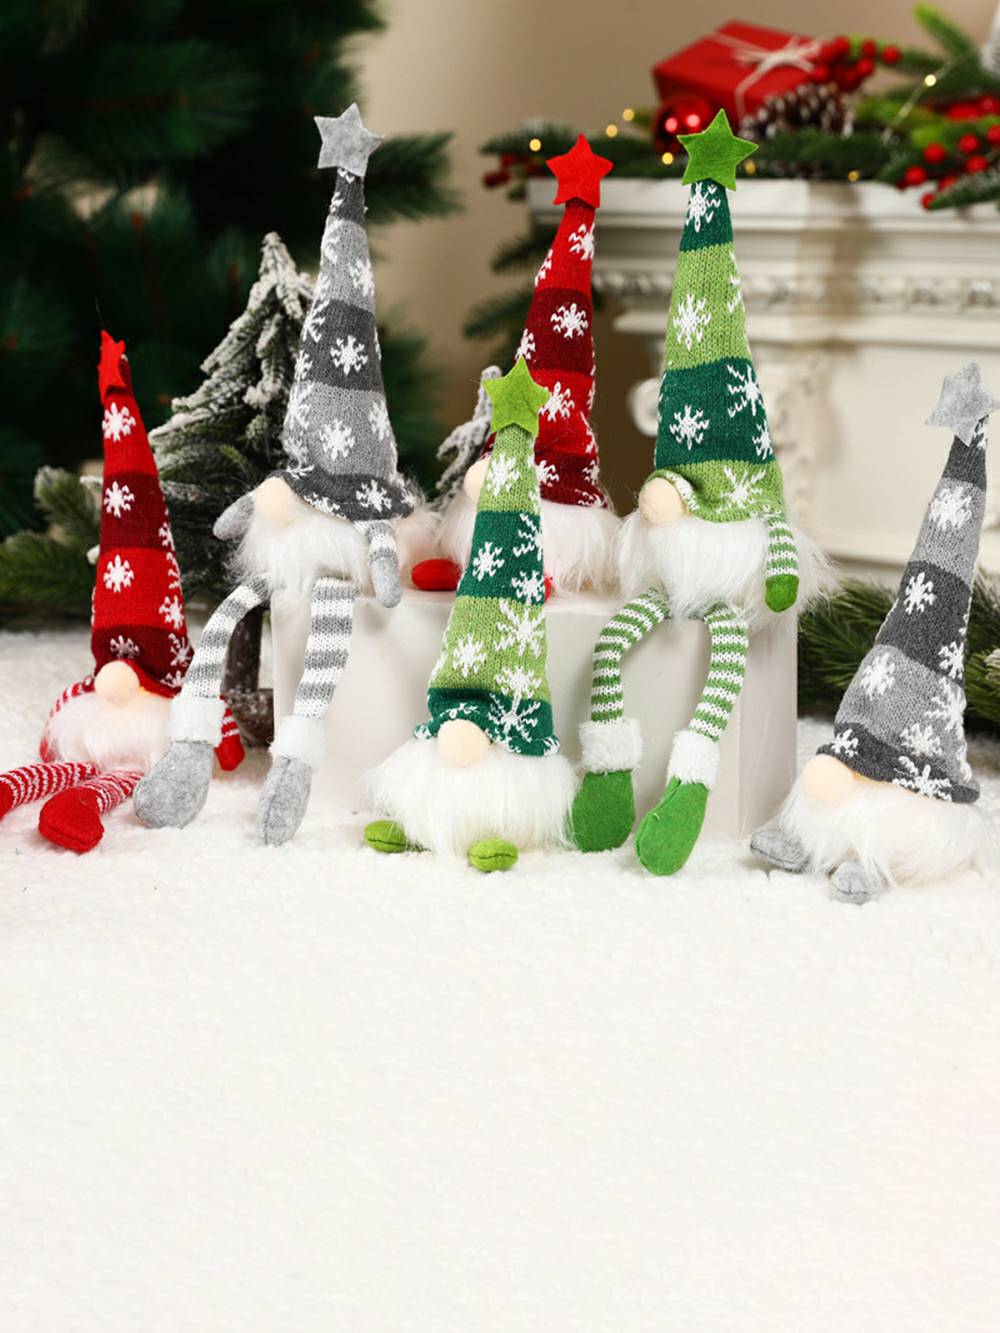 Muñeco Rudolph de patas largas con forma de copo de nieve con iluminación LED de felpa navideña